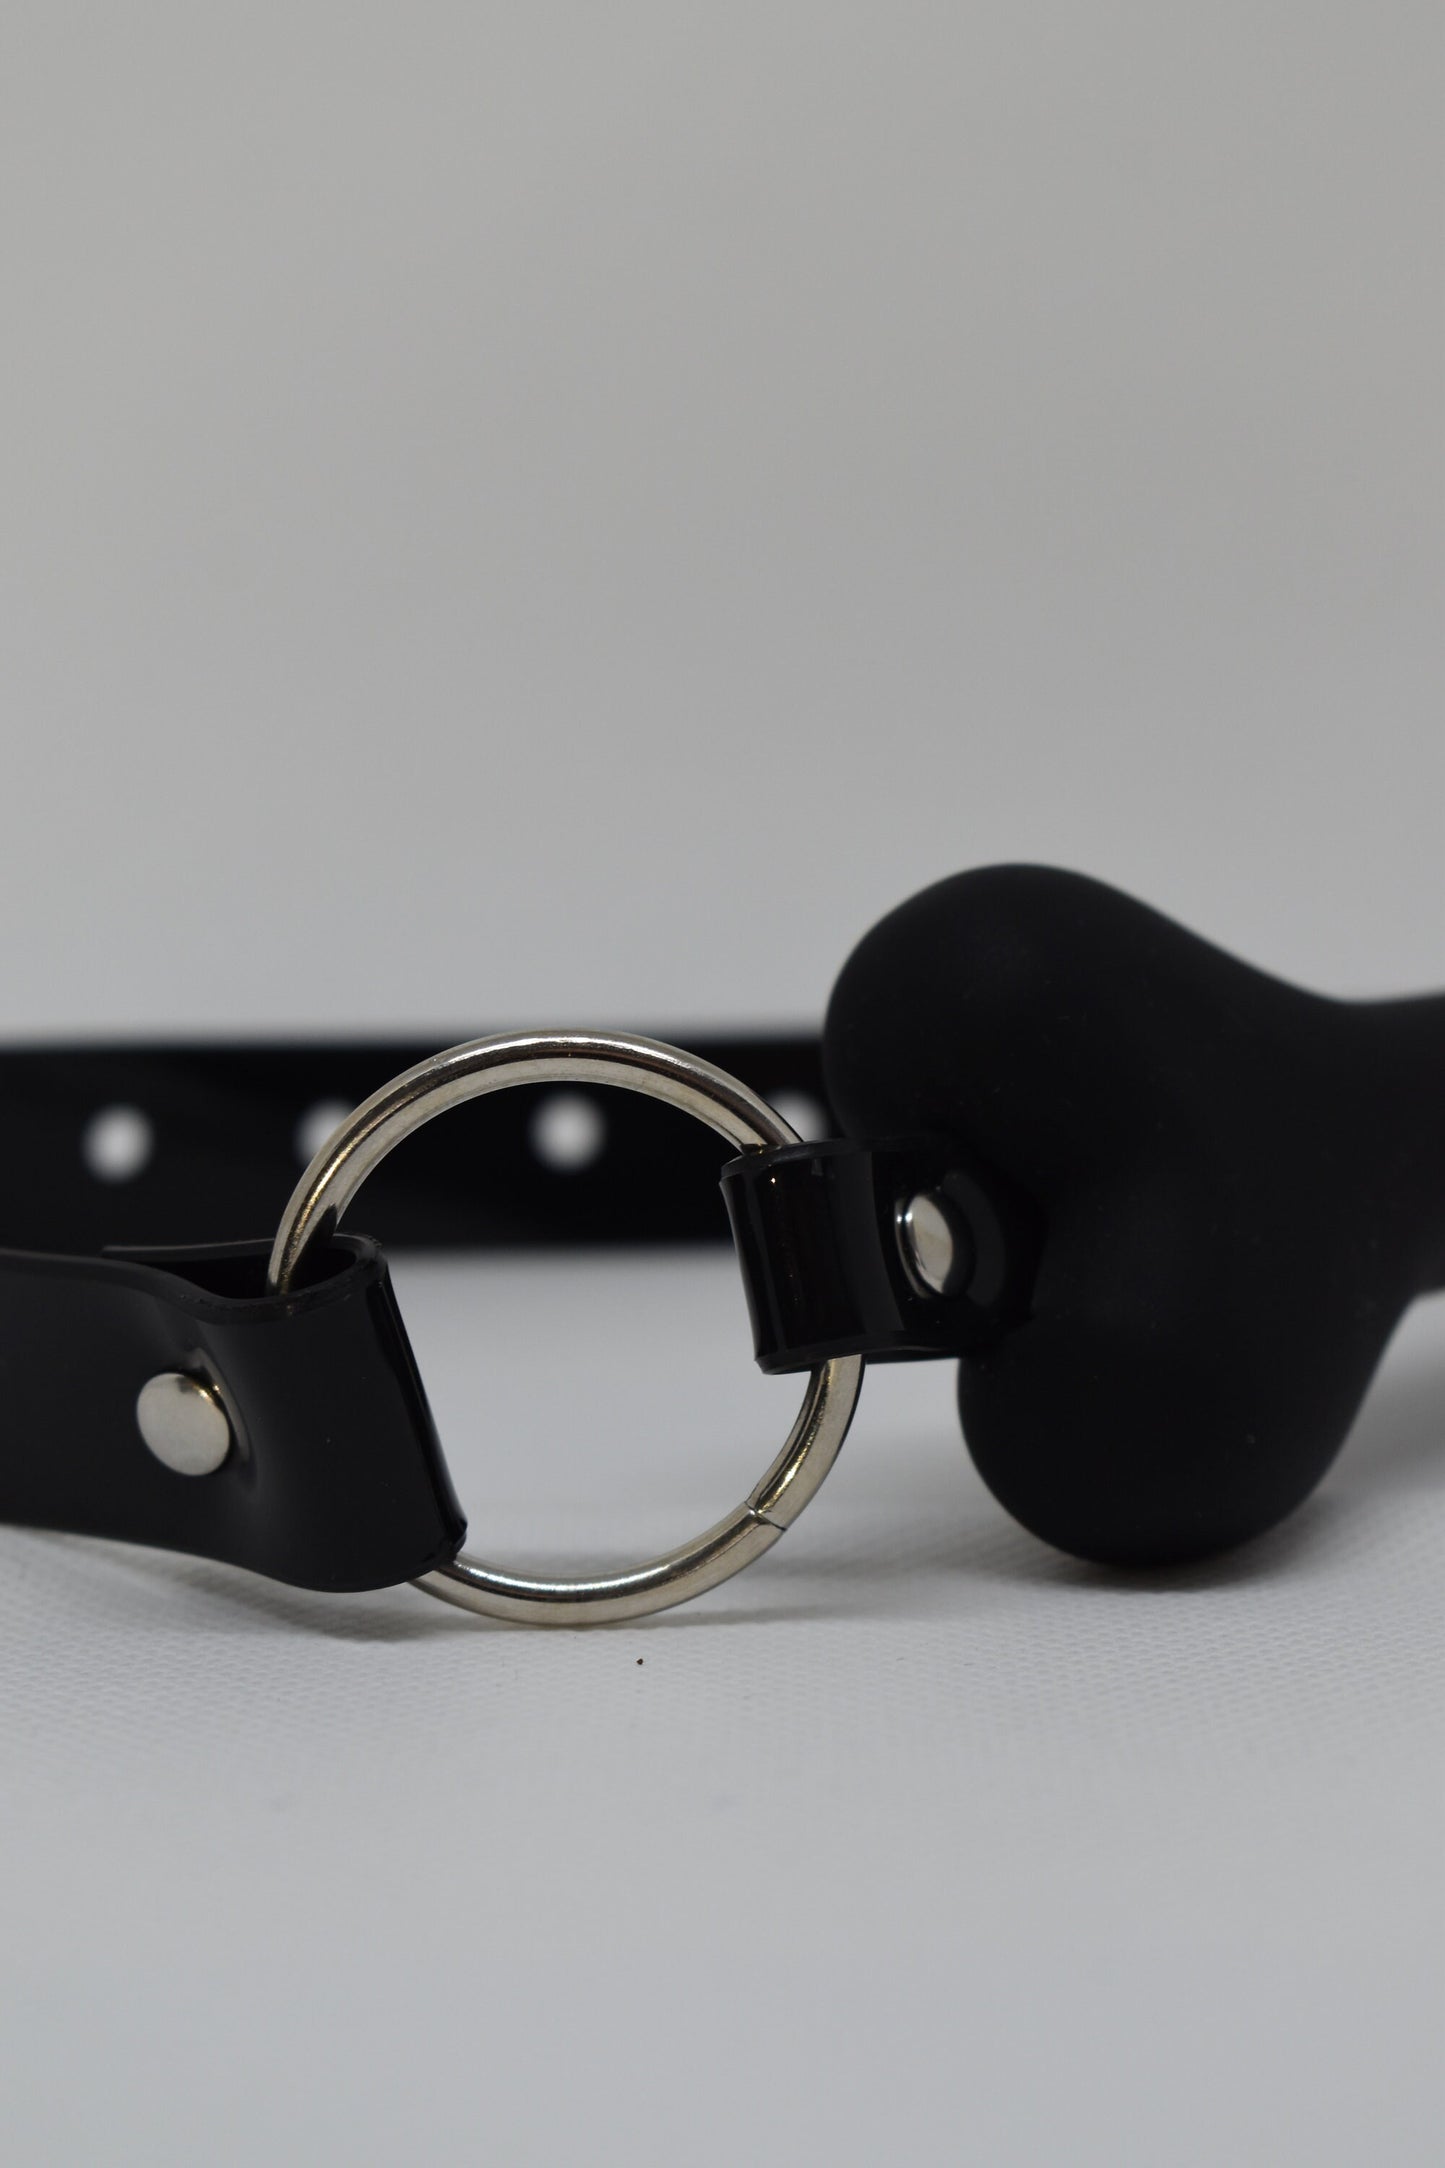 Black bone gag with PVC strap -Lockable -Vegan